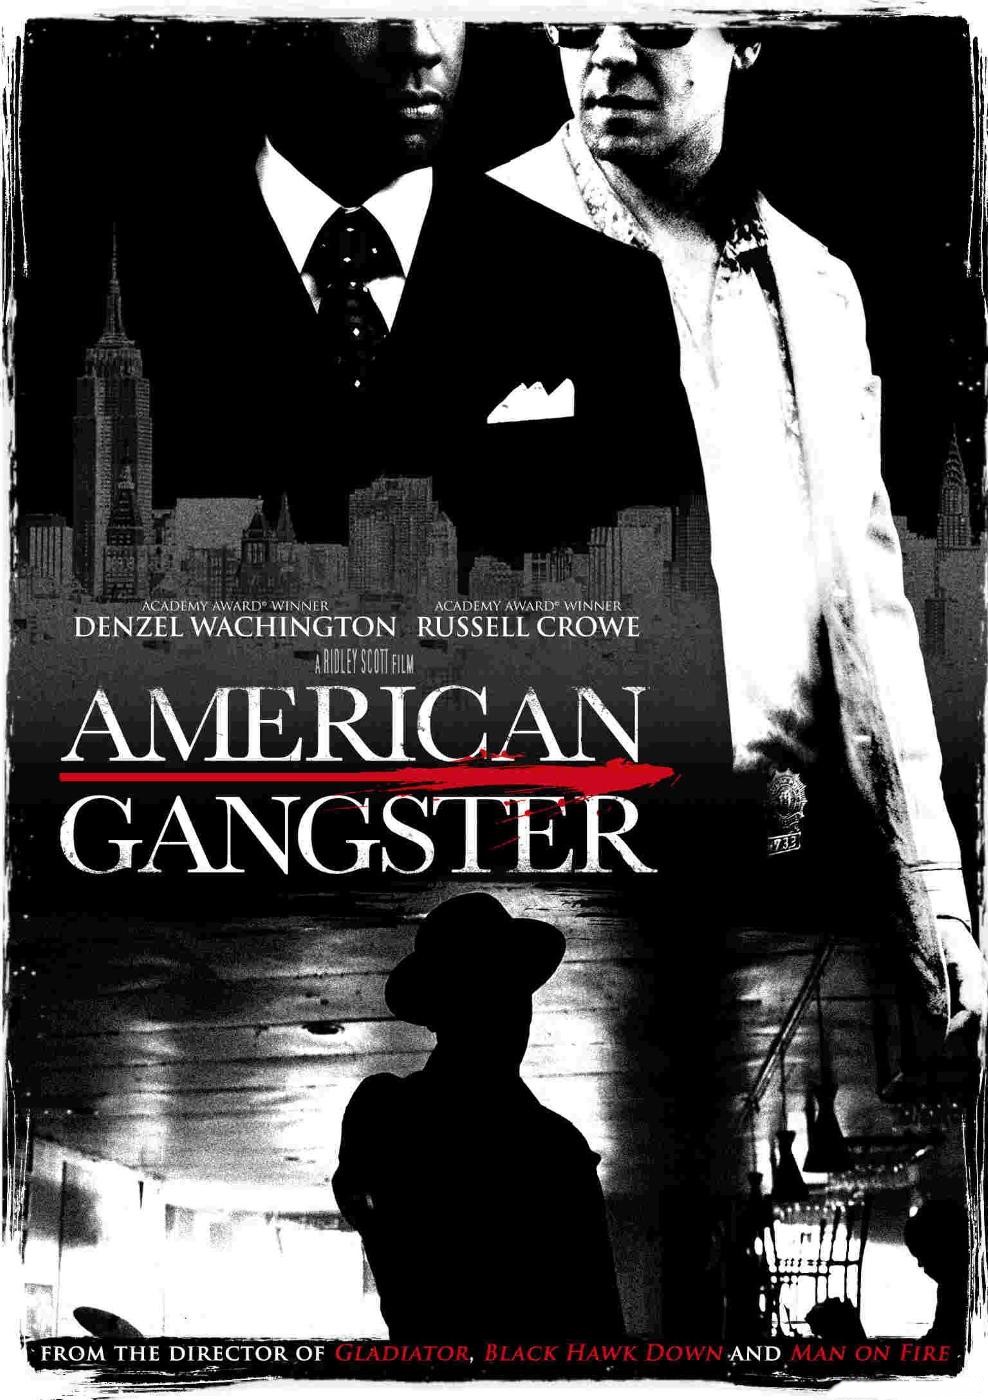 American Gangster HD wallpapers, Desktop wallpaper - most viewed